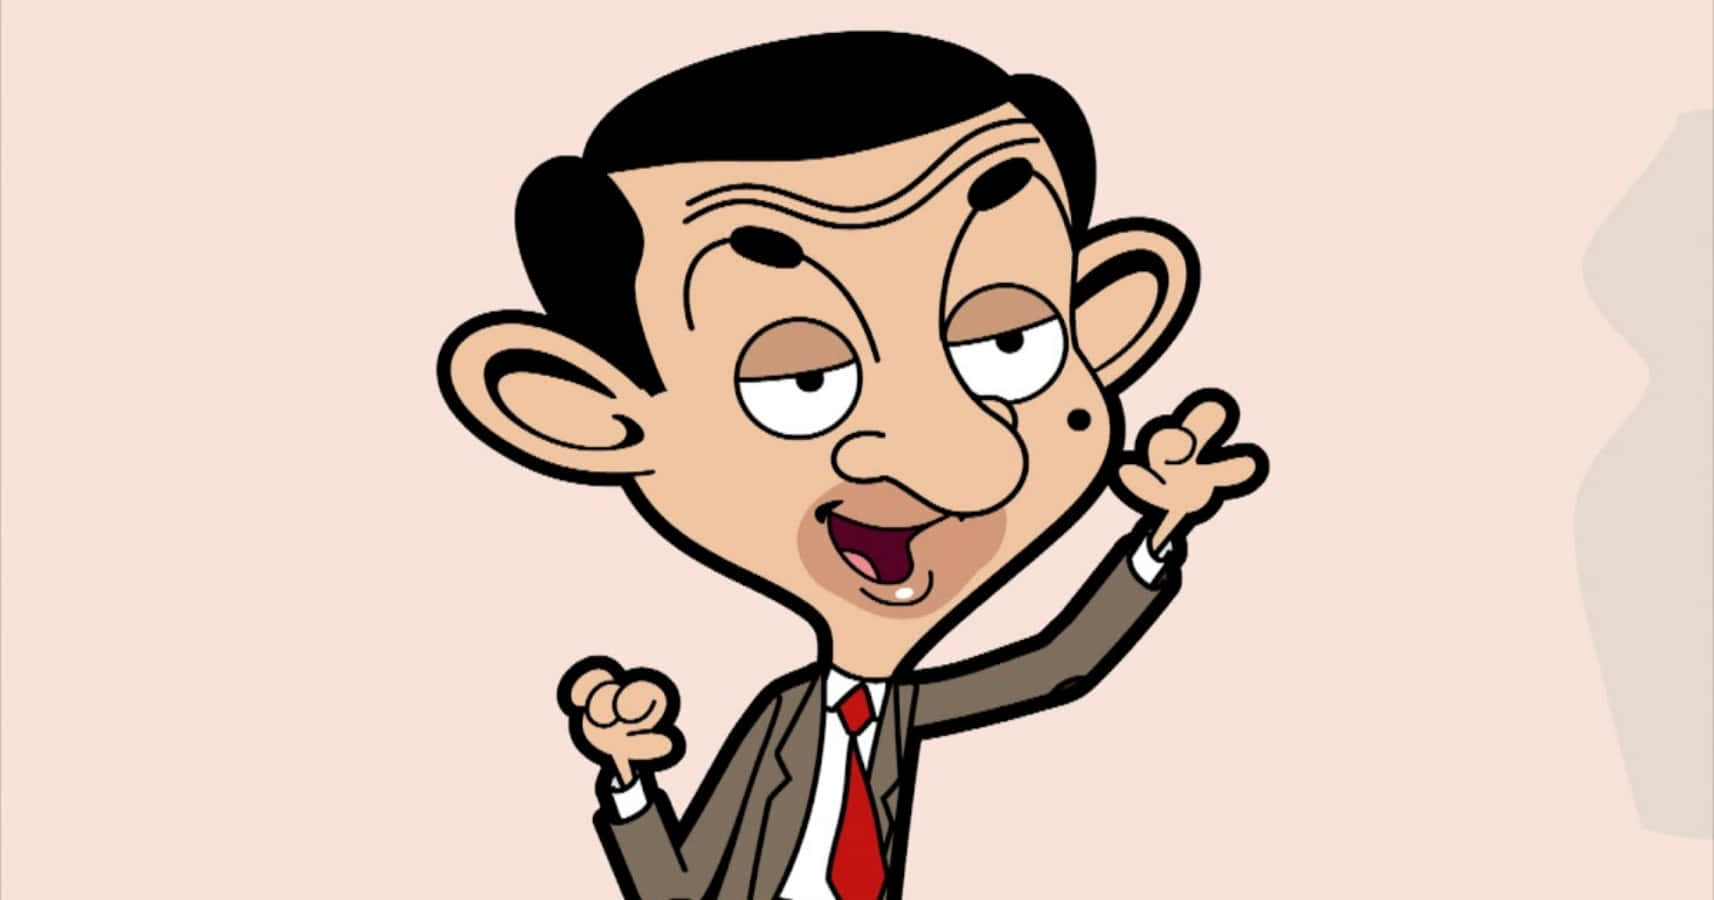 Wacky Mr. Bean at the Airport